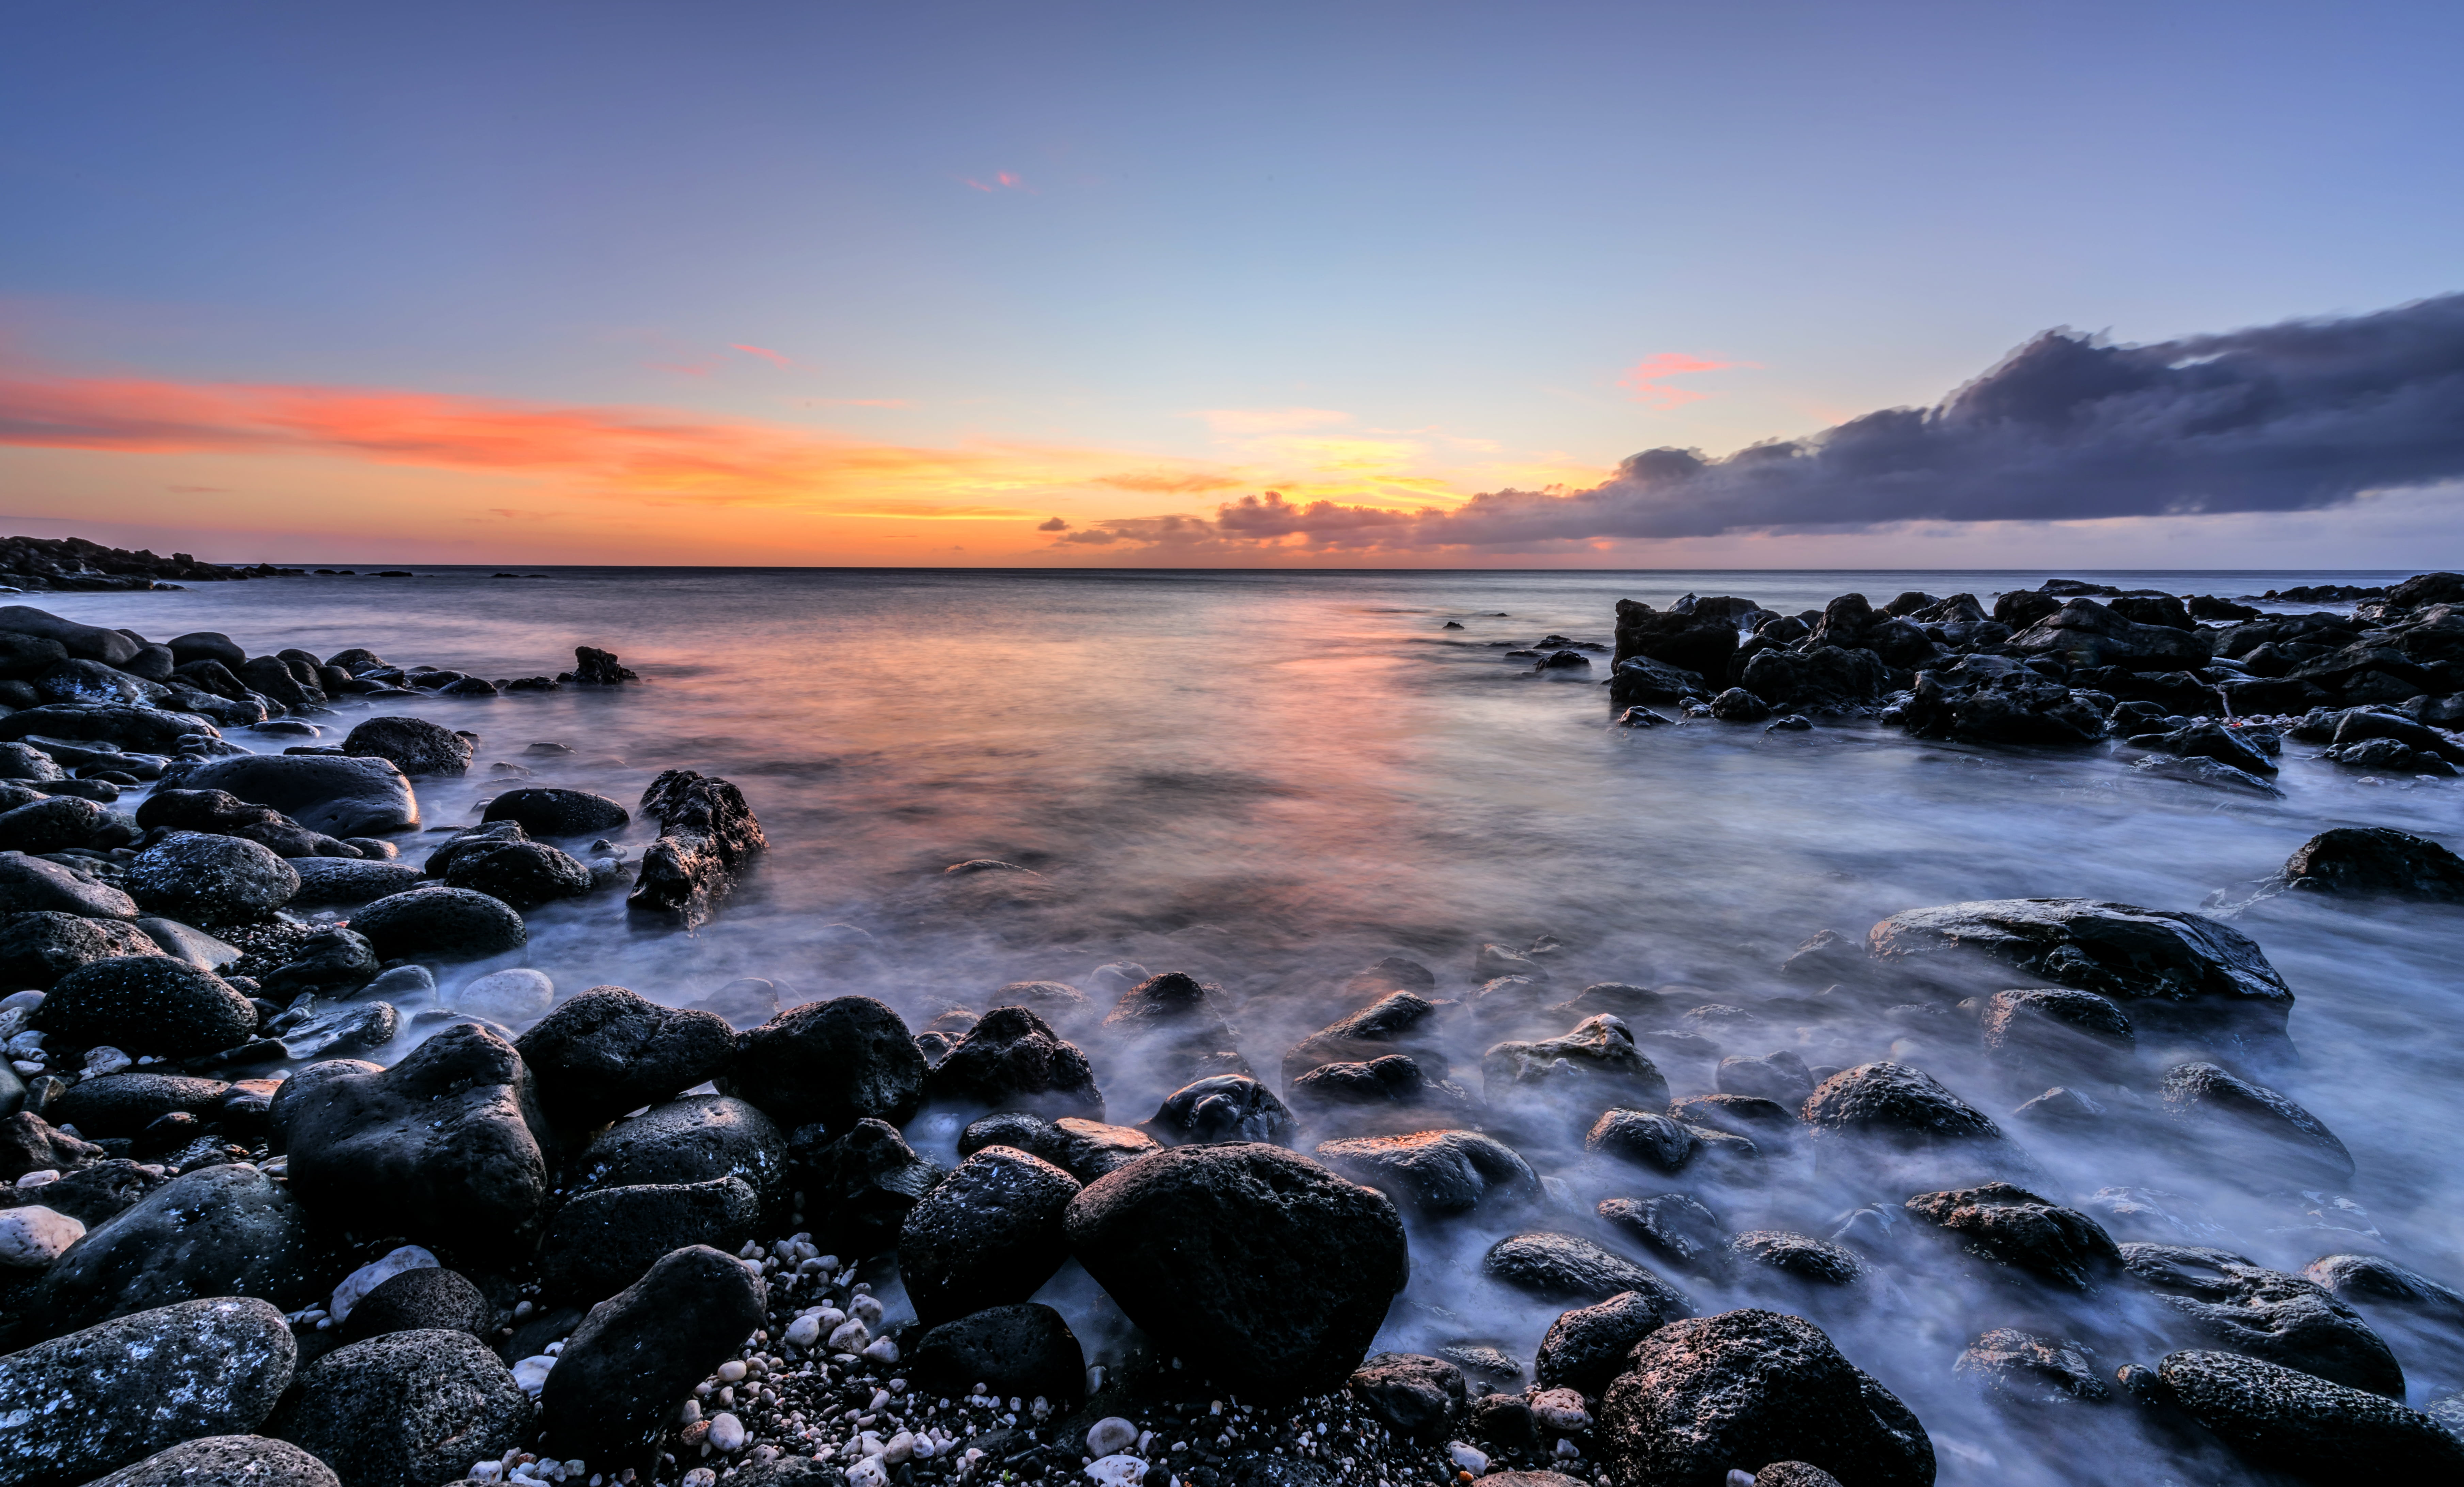 waves bashing rocks on the shore at sunset, Kapa'a, Beach, HDR